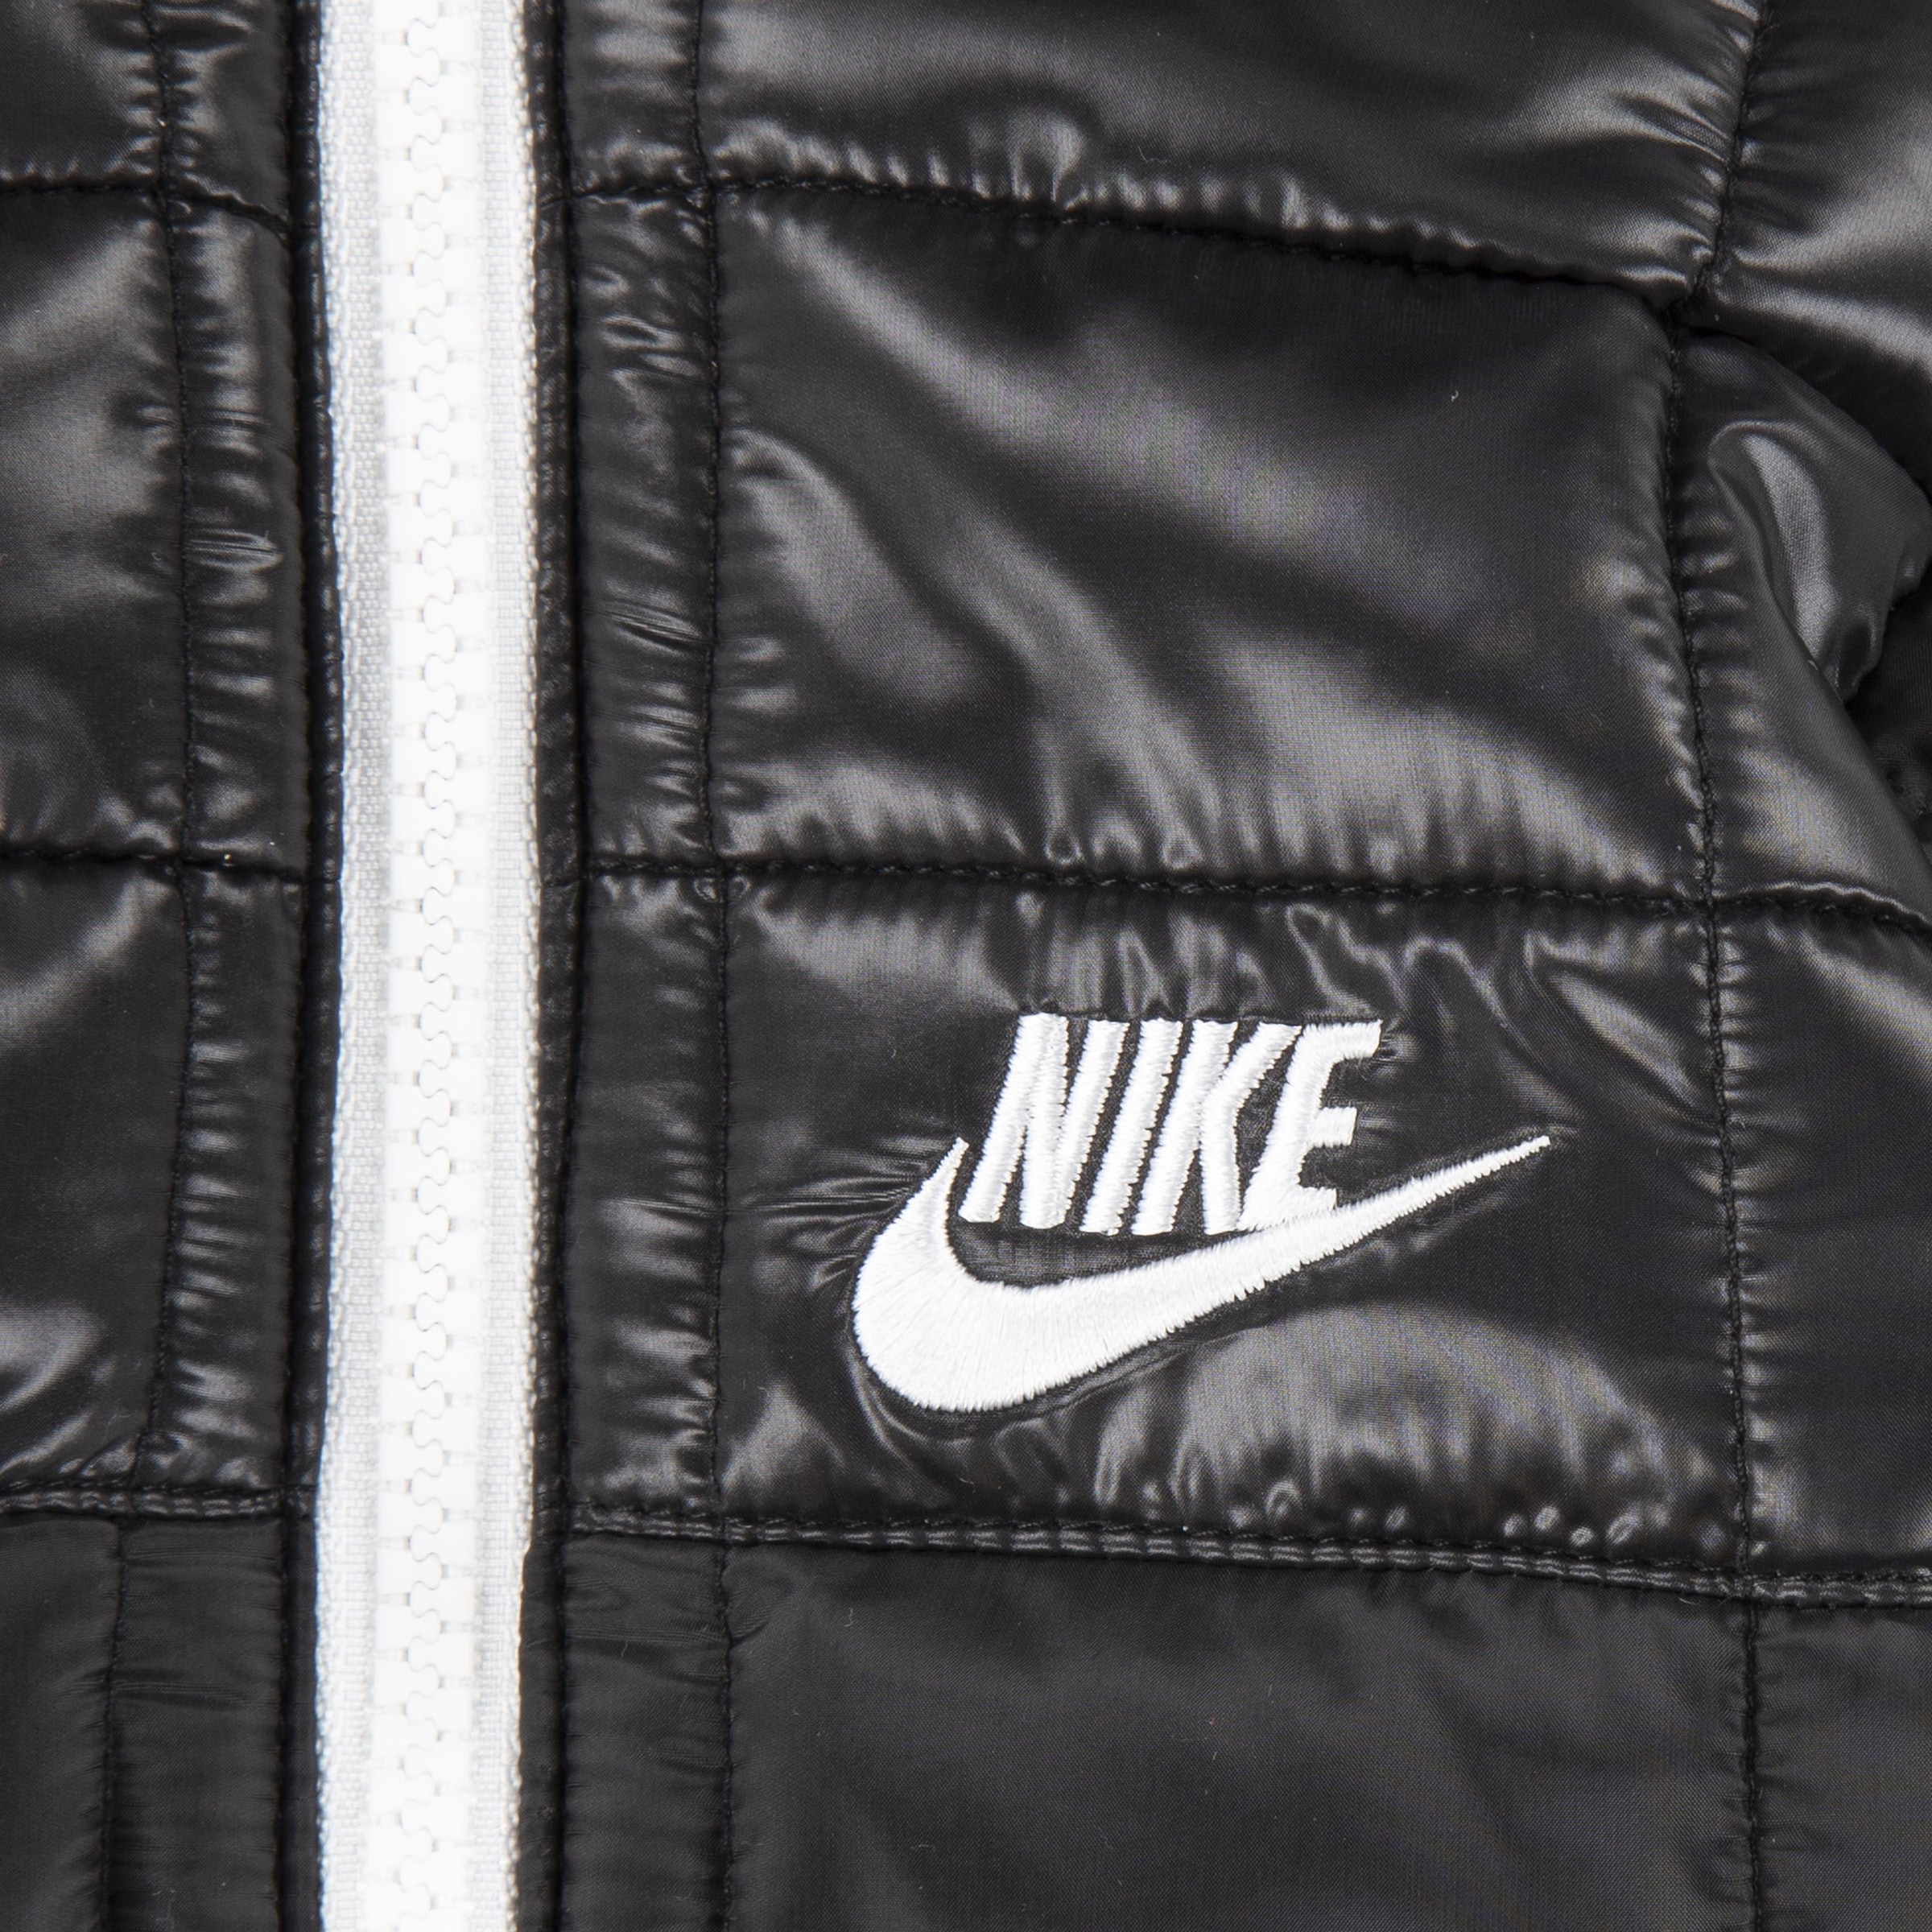 Nike Sportswear Schneeoverall »COLORBLOCK SNOWSUIT«